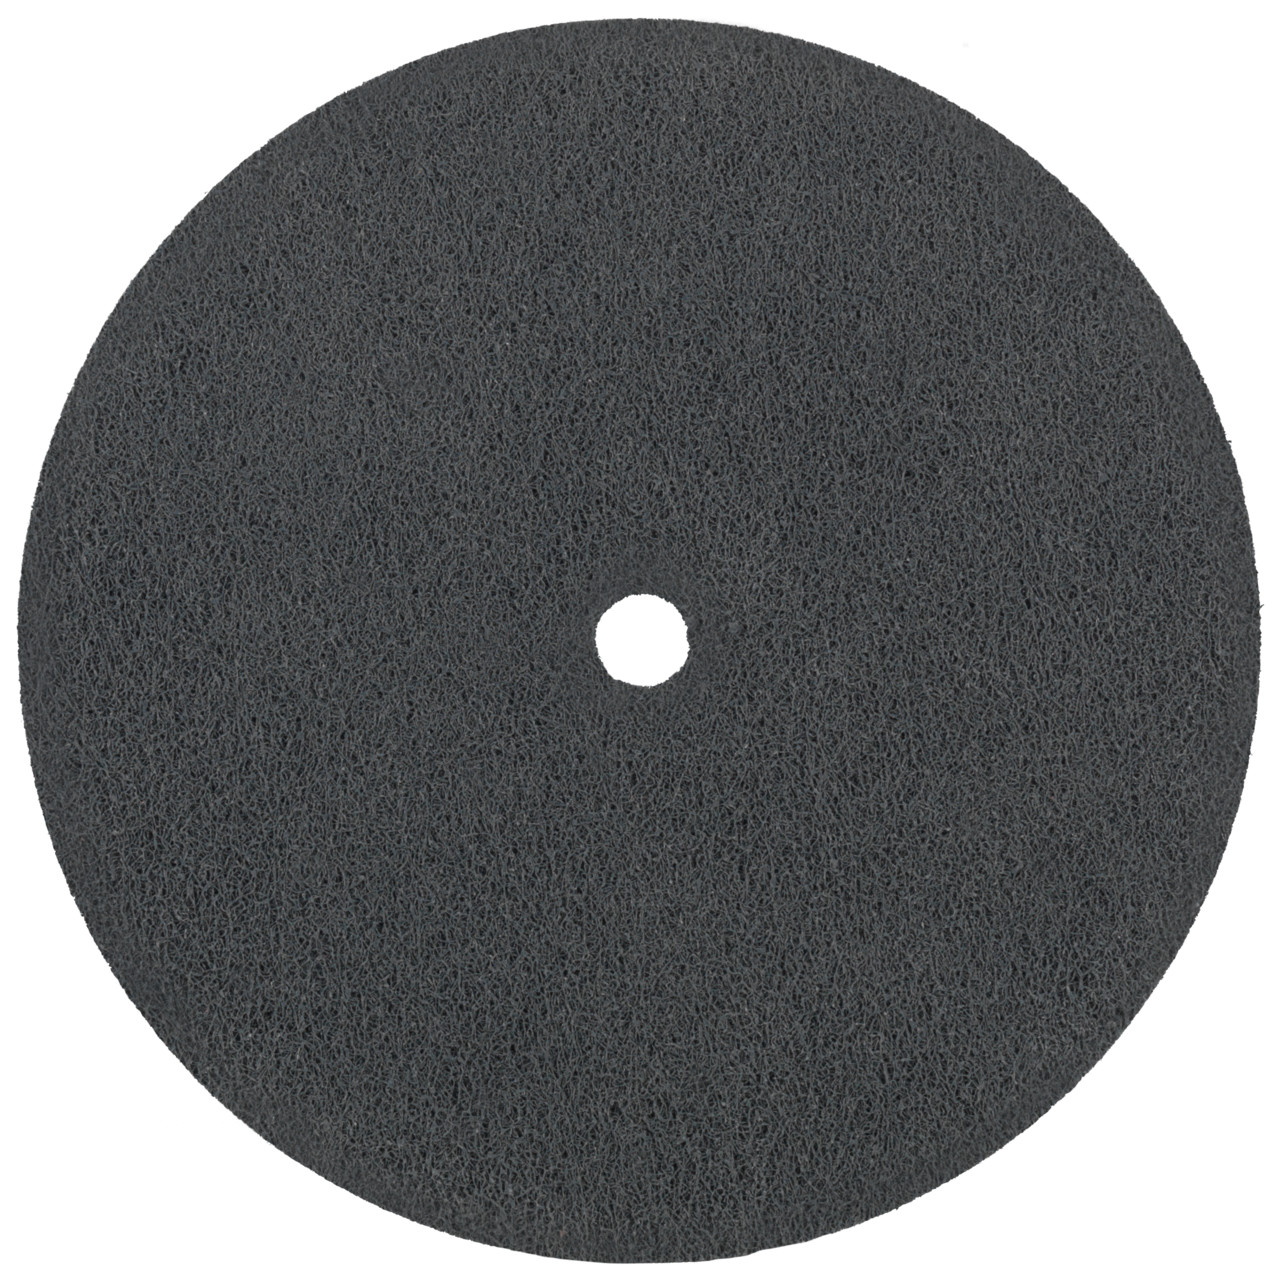 Tyrolit Compact disc pressati DxDxH 152x6x12,7 Inserto universale, 2 C FEIN, forma: 1, Art. 34190235